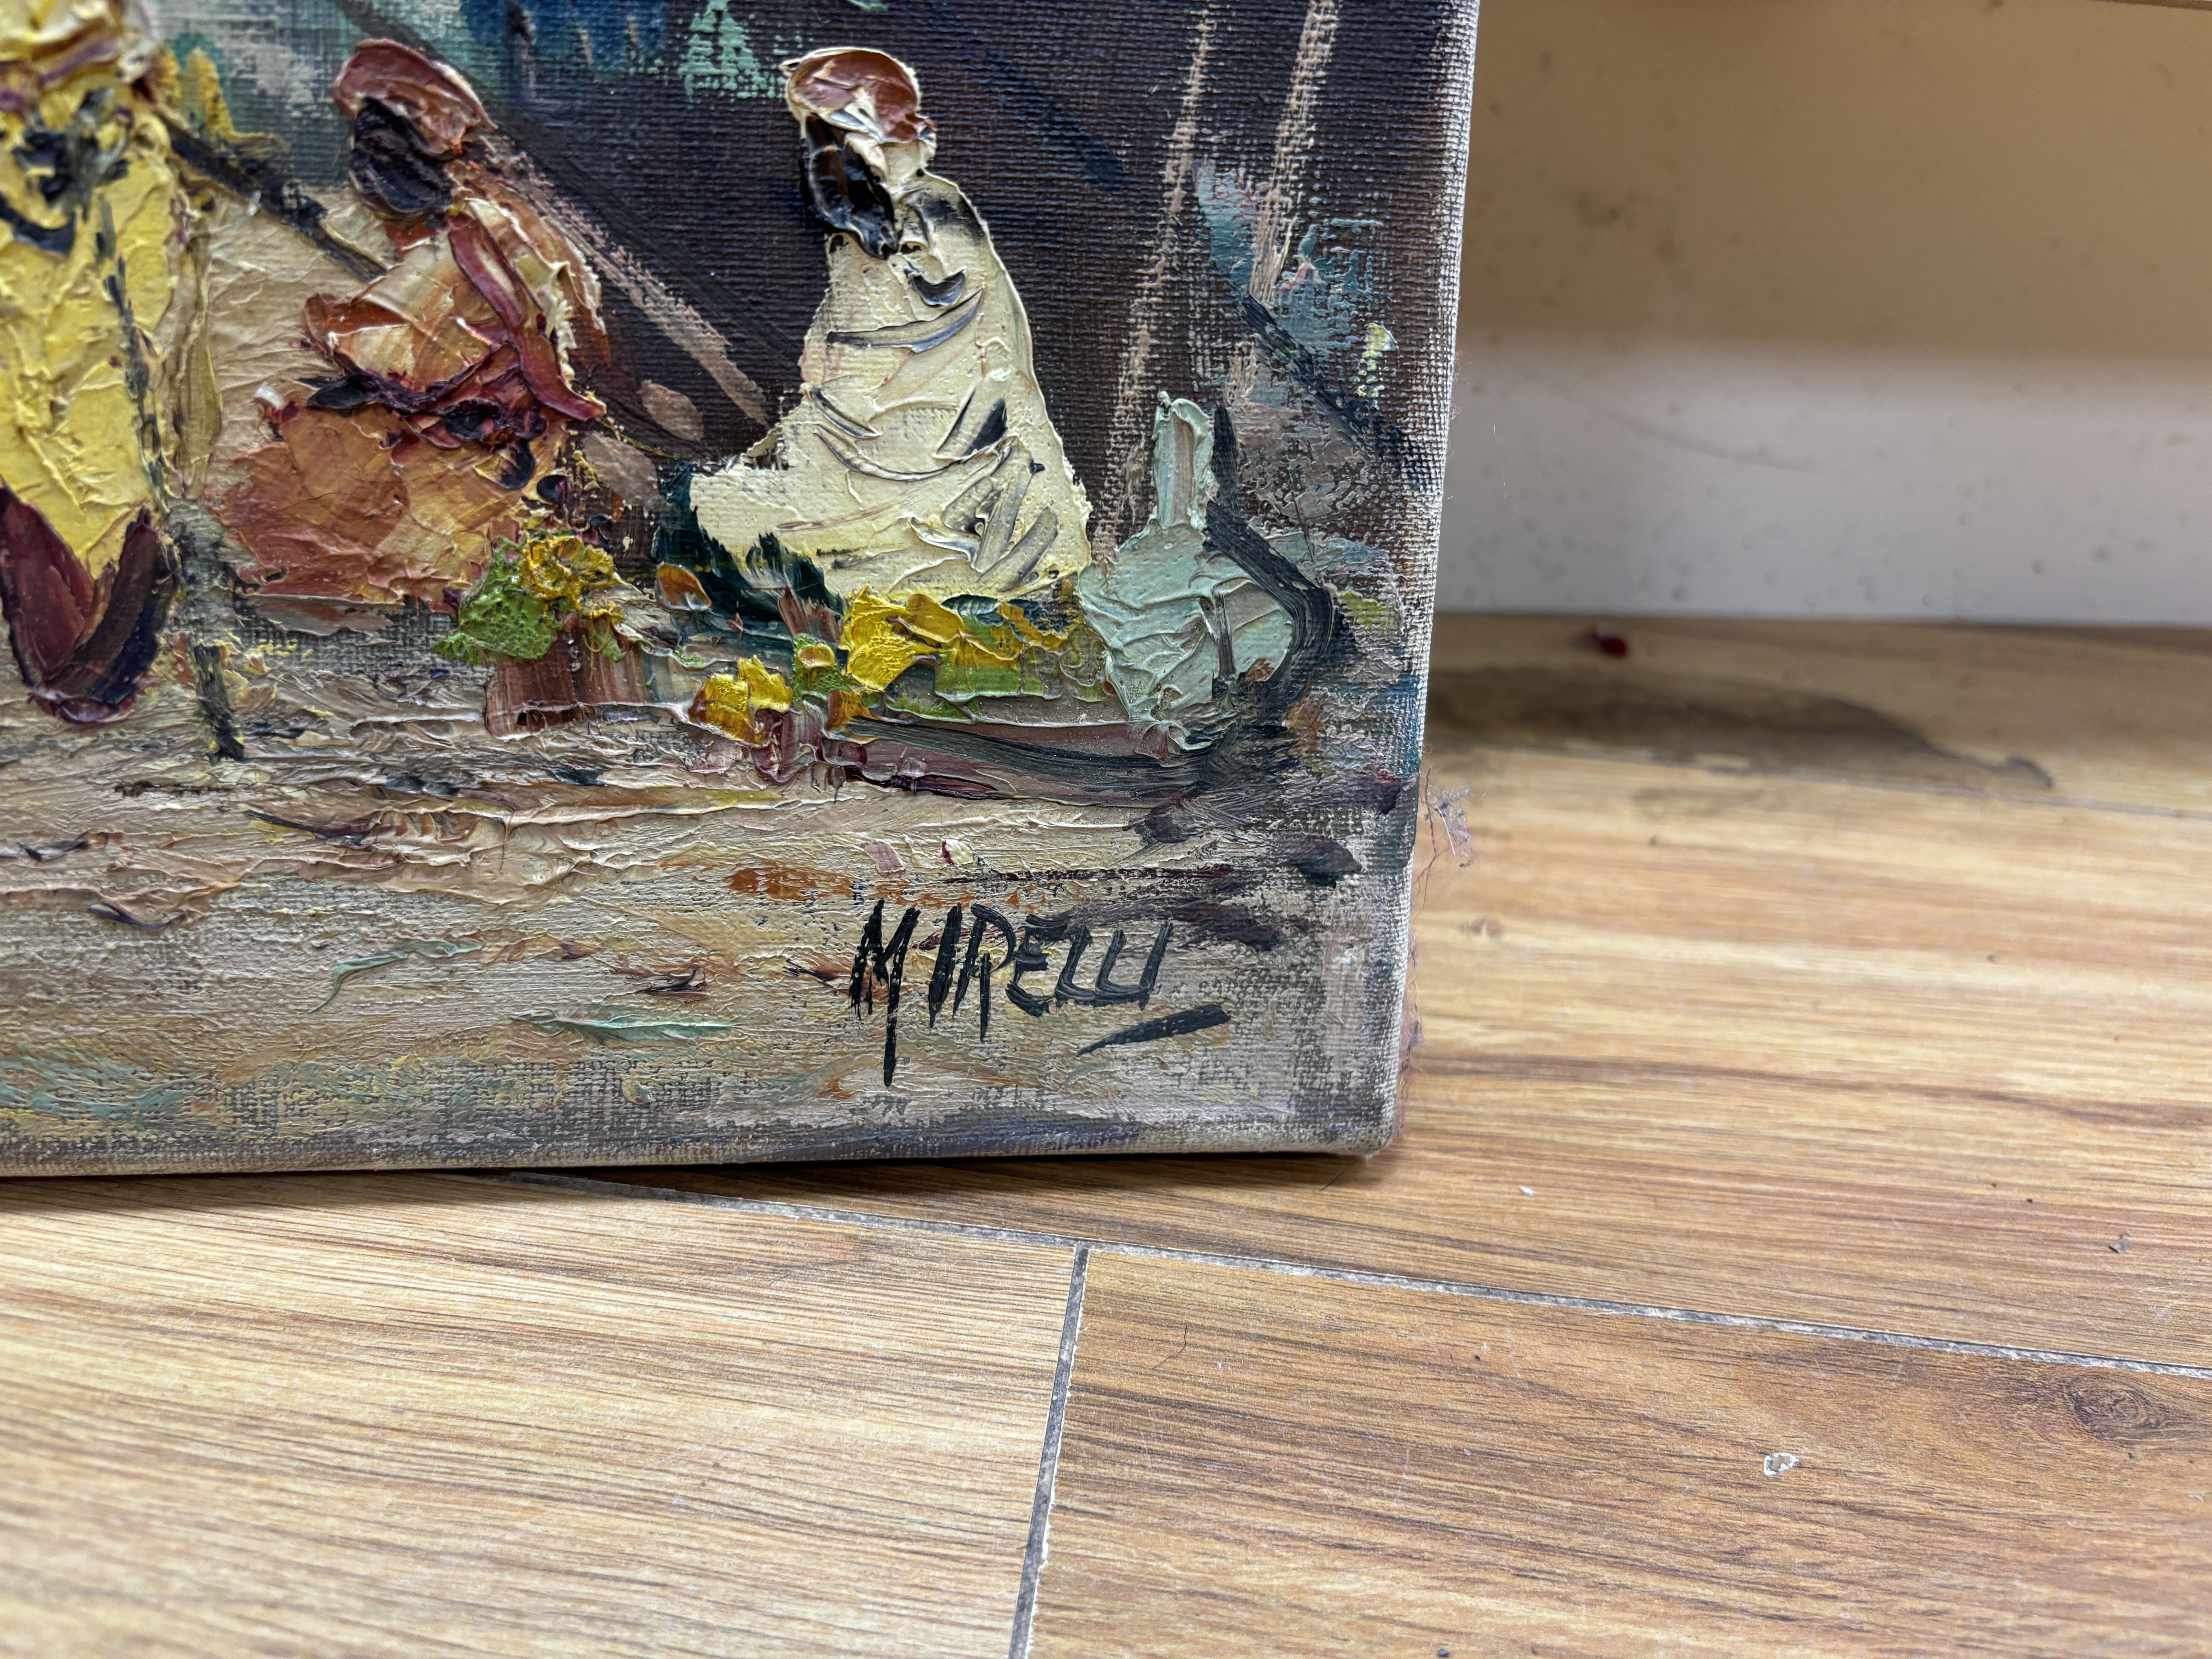 Mirelli, Orientalist style impasto oil on canvas, Market scene with figures, signed, 40 x 80cm, unframed